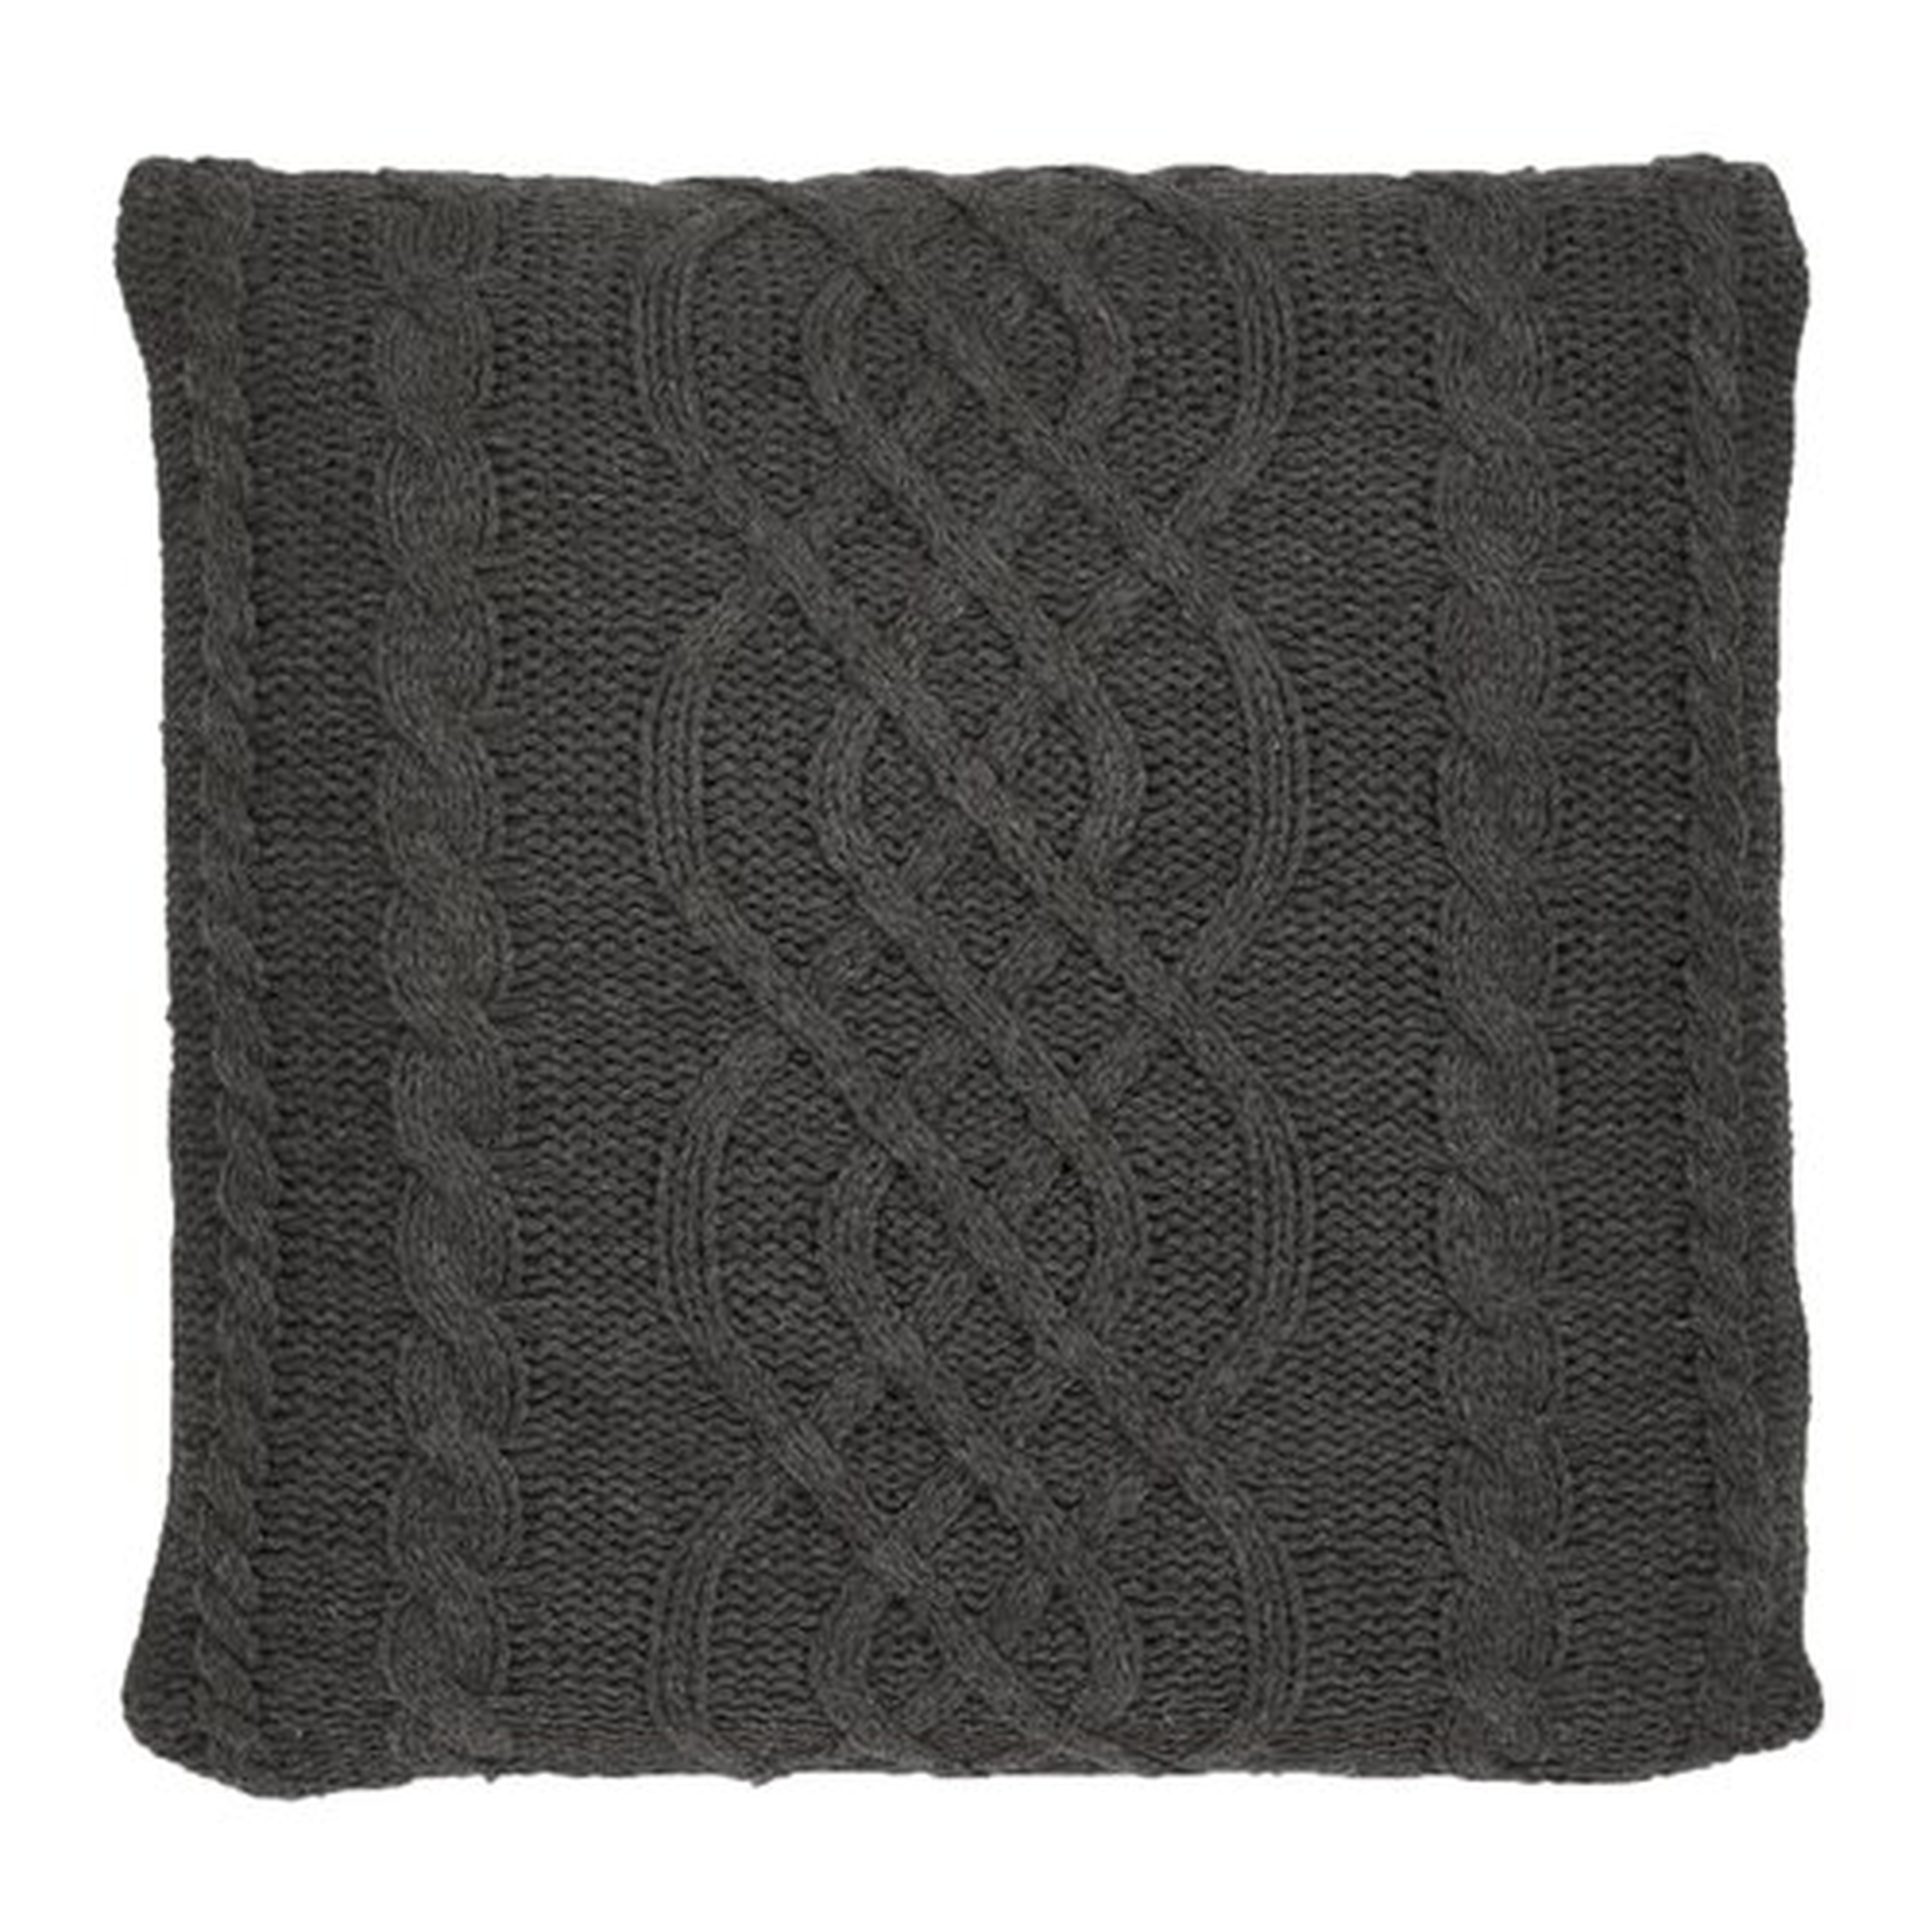 Lucero Chunky Cable Knit Throw Pillow - Wayfair